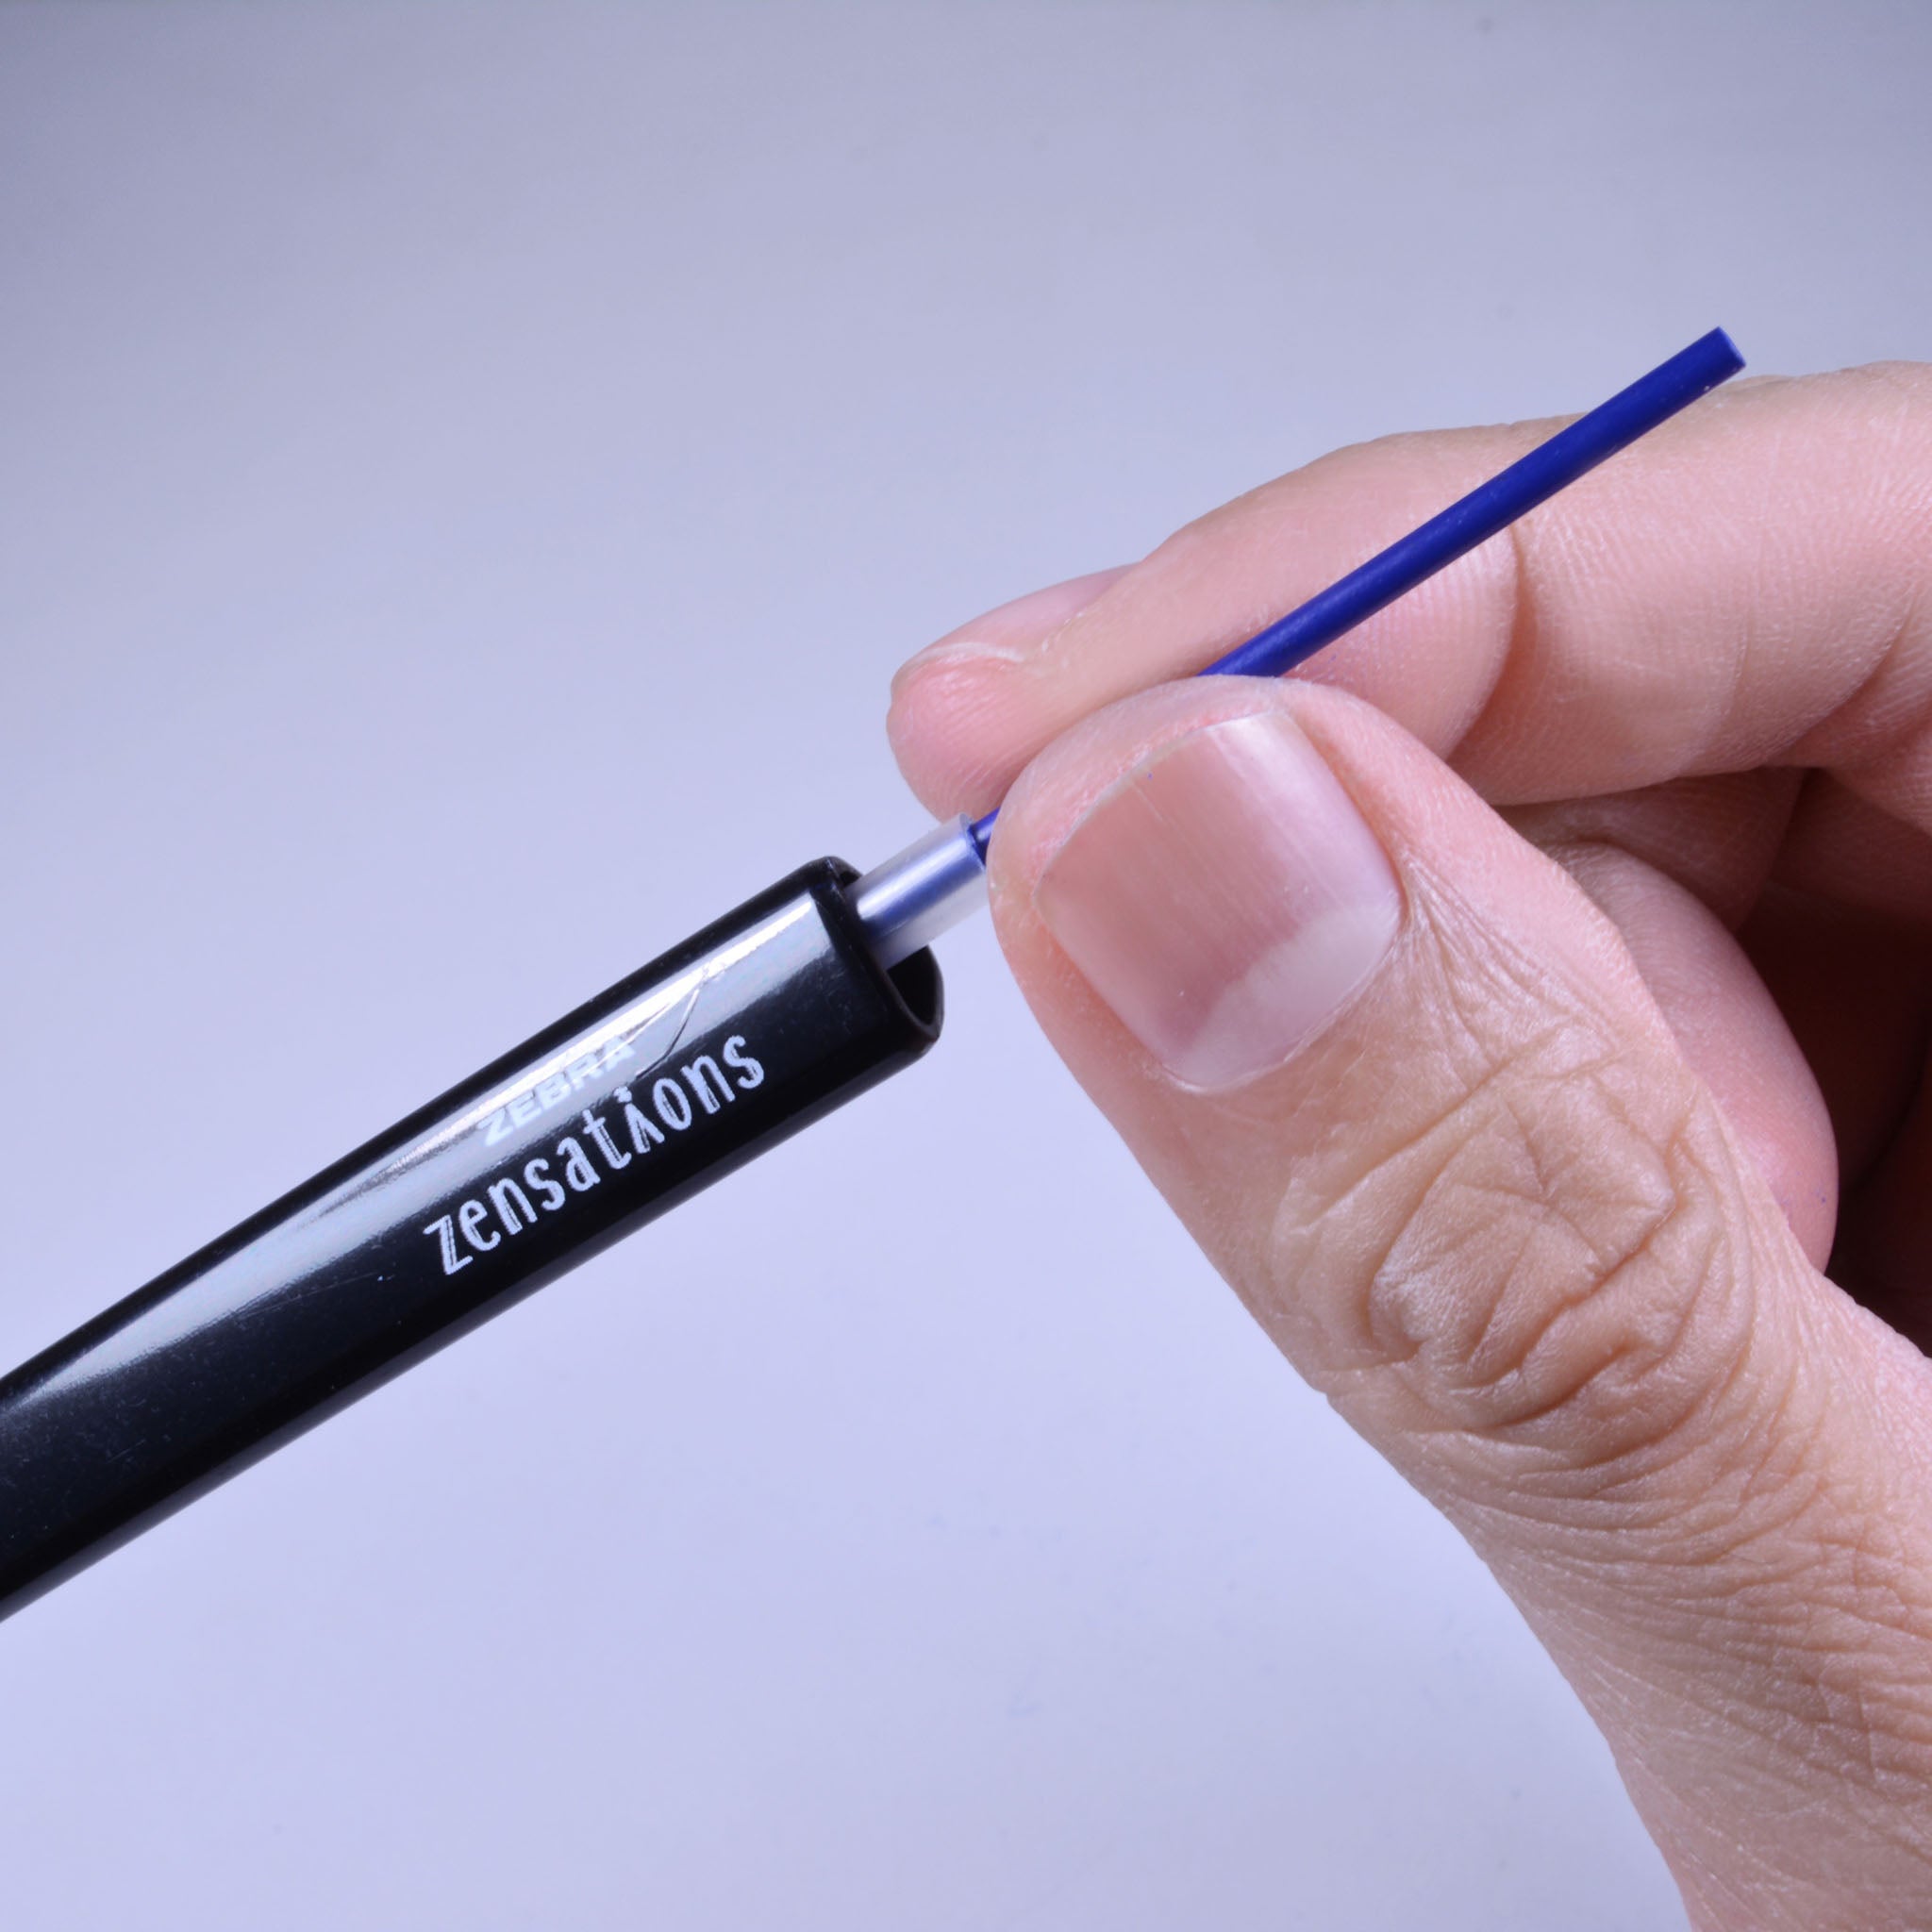 Review-Zebra Zensations Mechancial Colored Pencils #Zensations